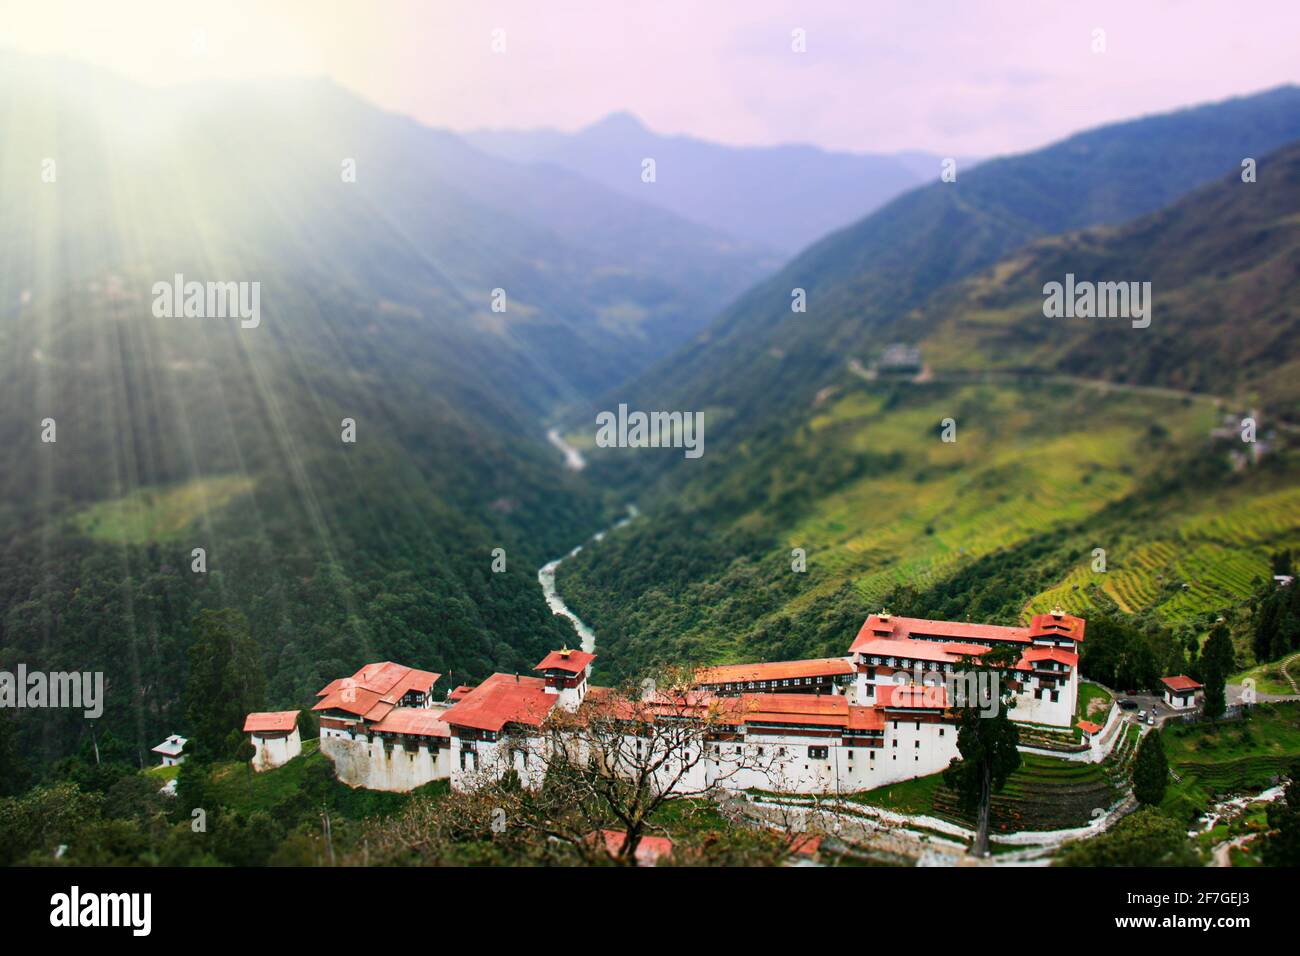 Dakar Dzong, Klosterfestung im Königreich Bhutan Himalaya Asien Blick in das Tal mit Fluss Sonnenstrahlen grünen Blick Panorama Sanctuary UNESCO Stockfoto